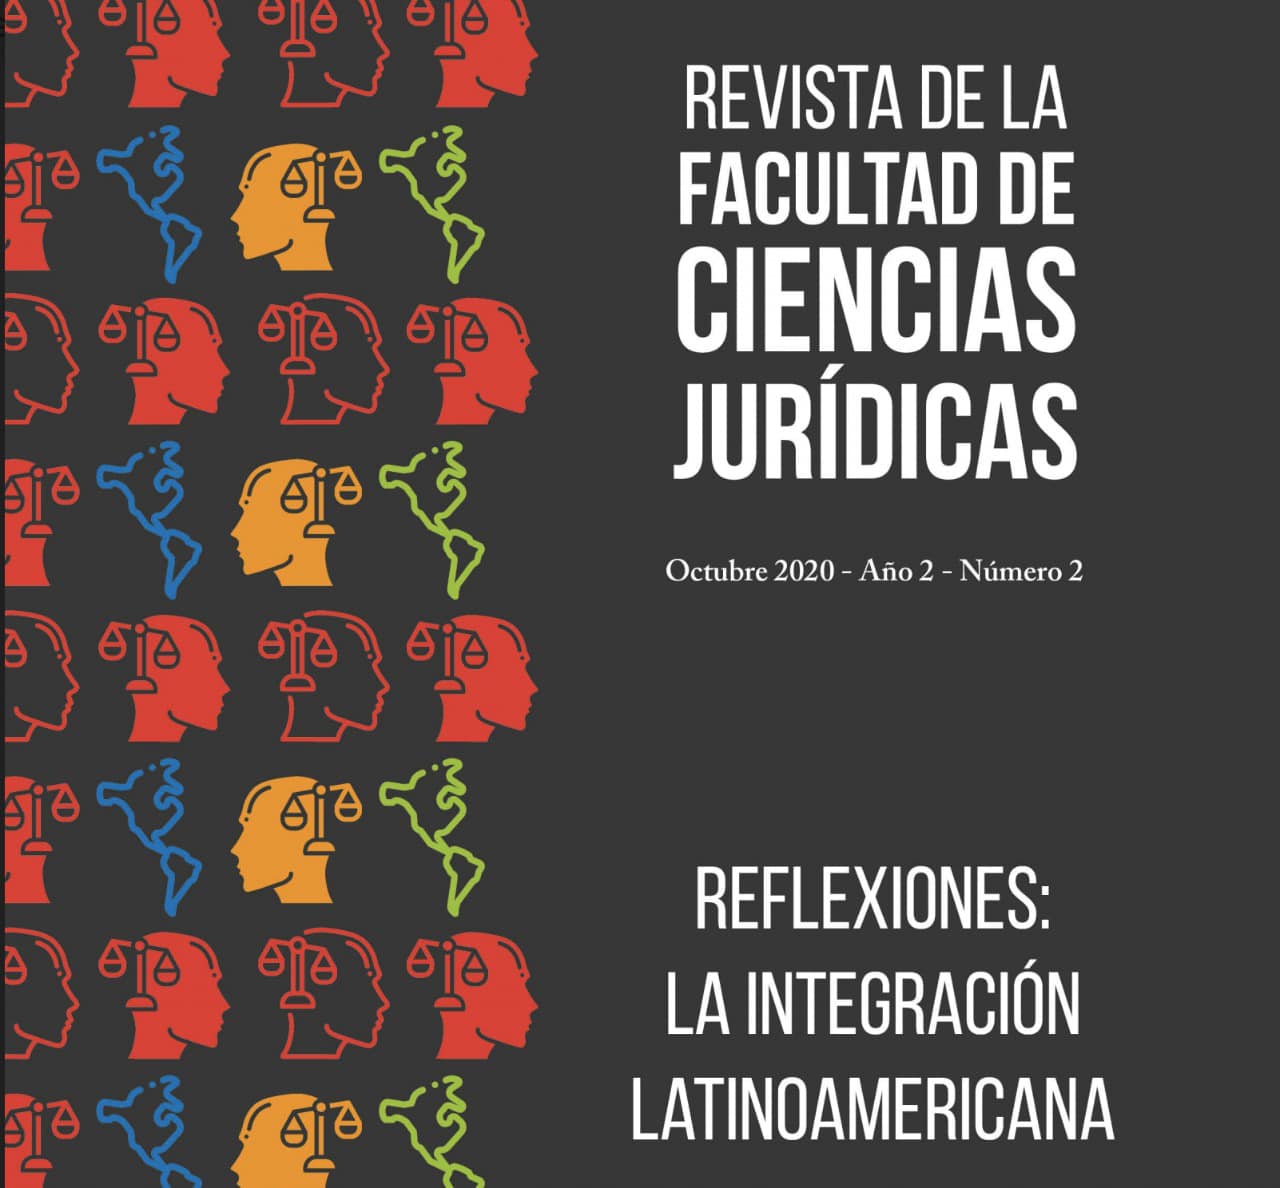 Legal Sciences analyzes Latin American integration